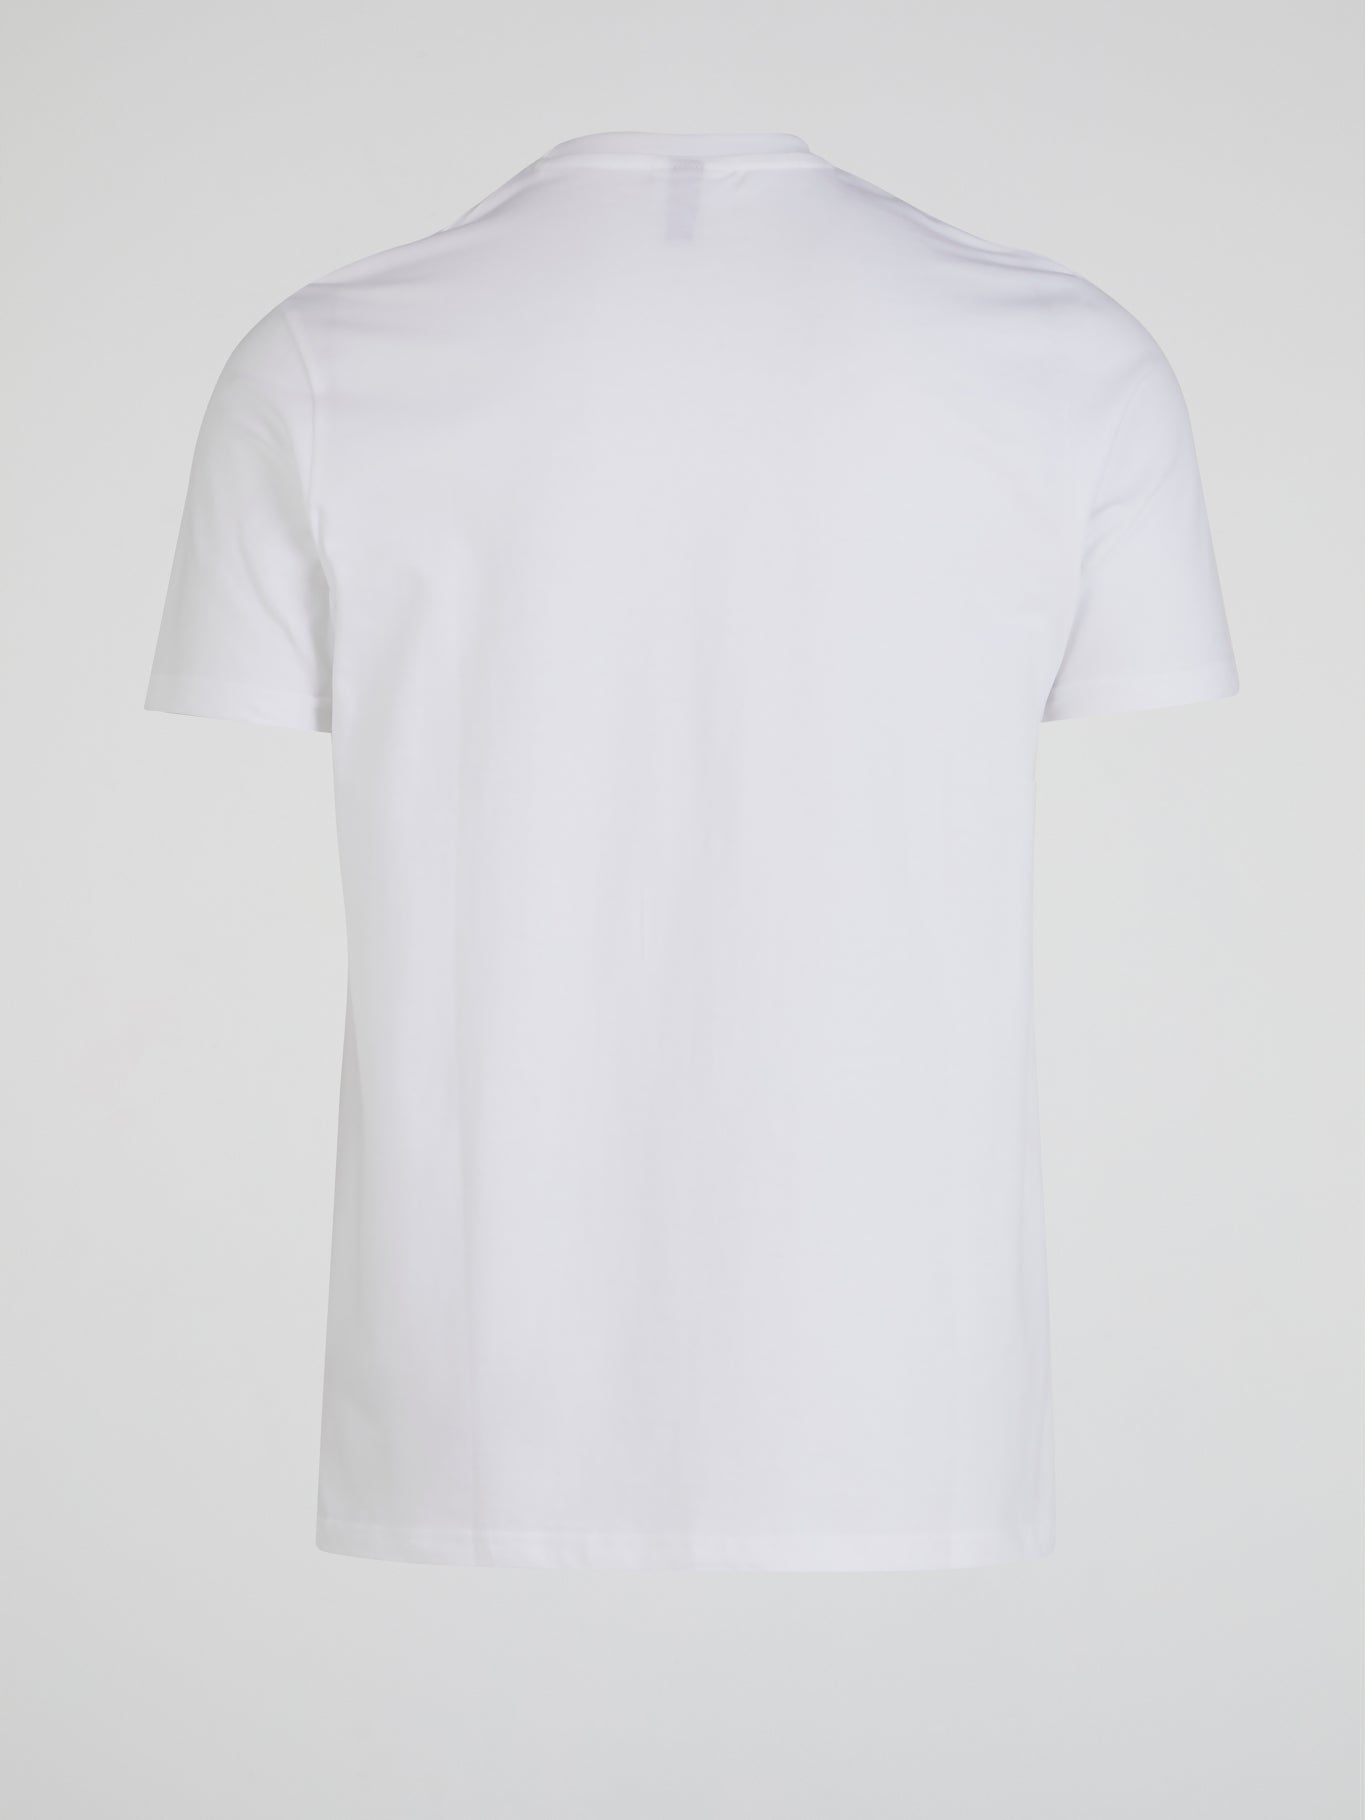 Multiz White Printed T-Shirt